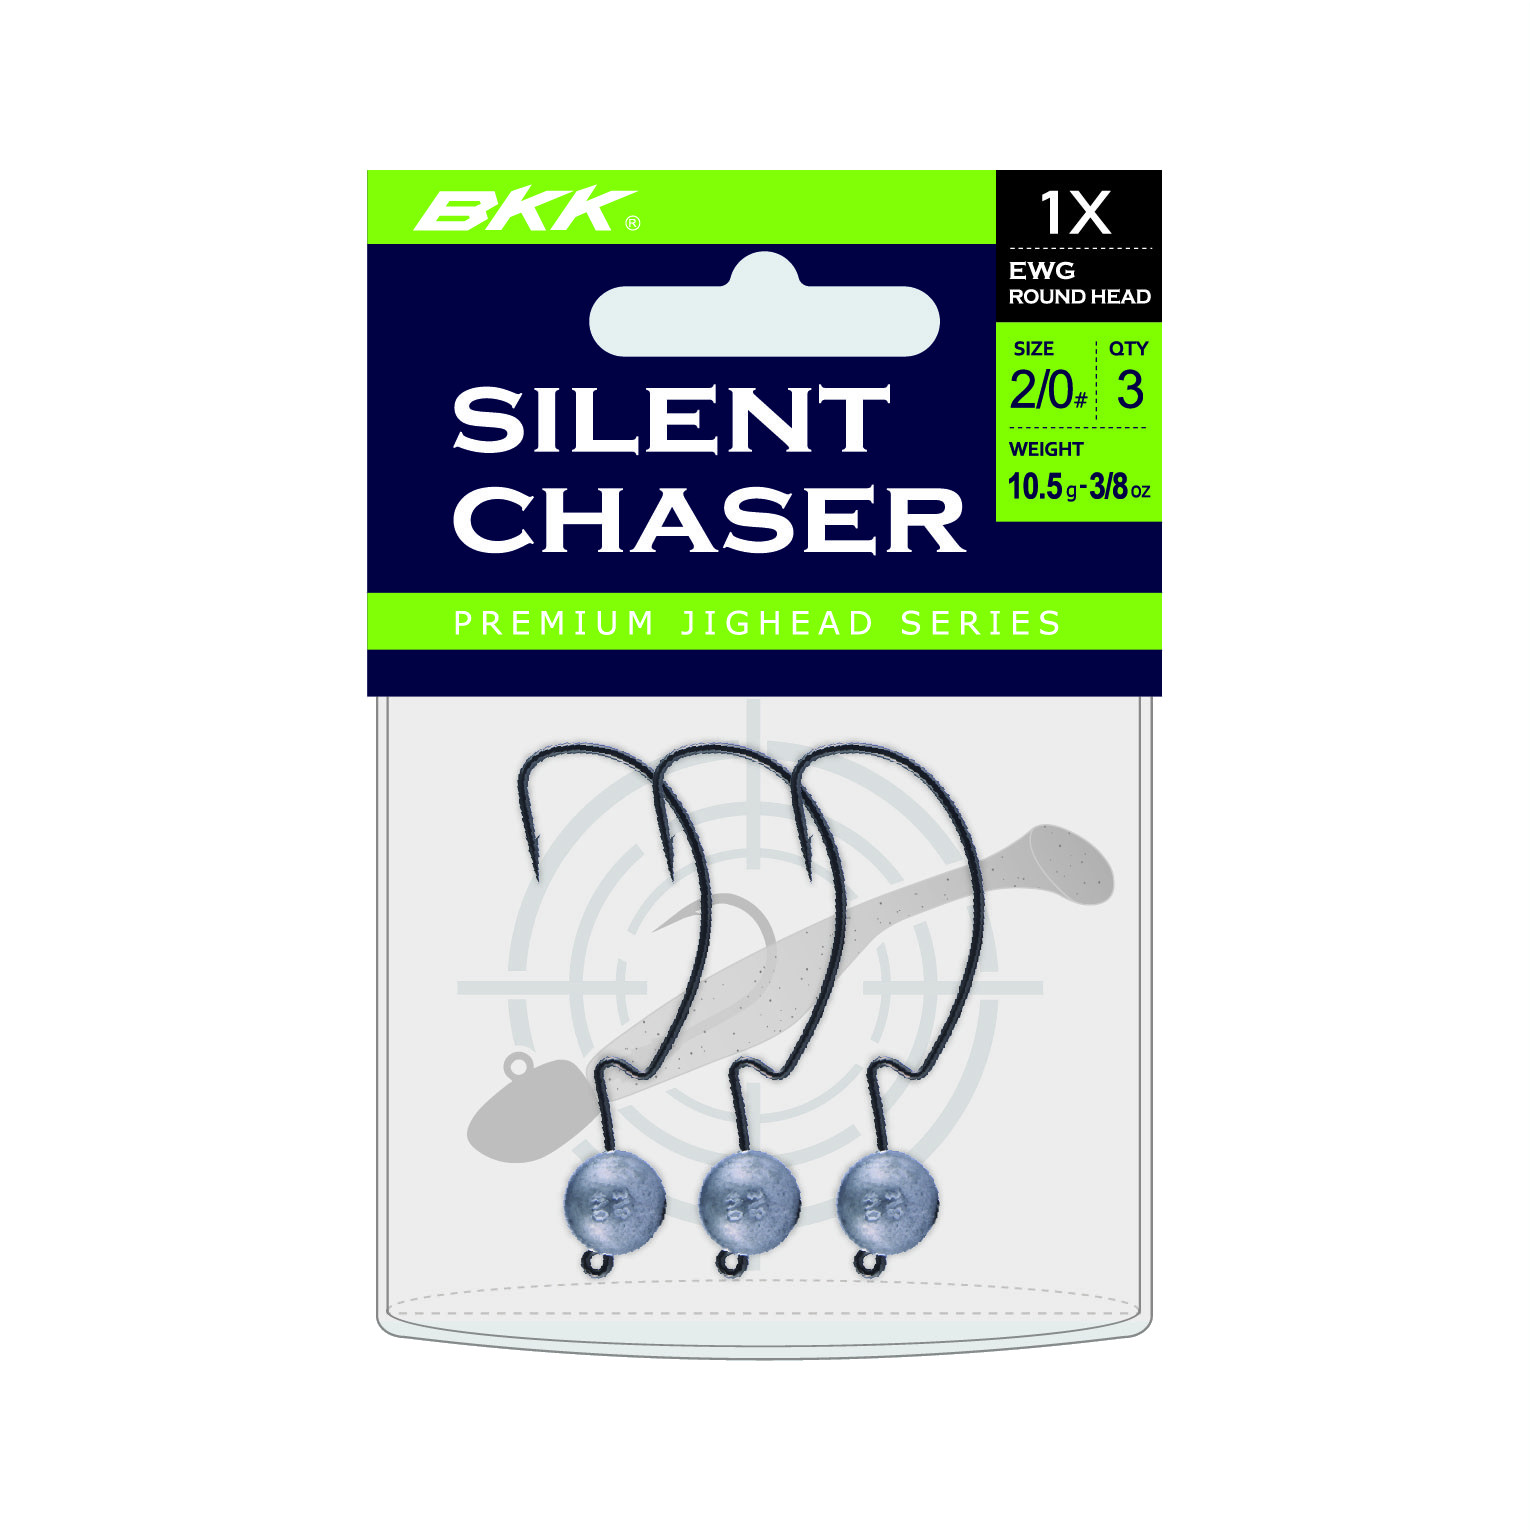 BKK Silent Chaser 1X EWG Round Head Cabeza de Plomo #1/0